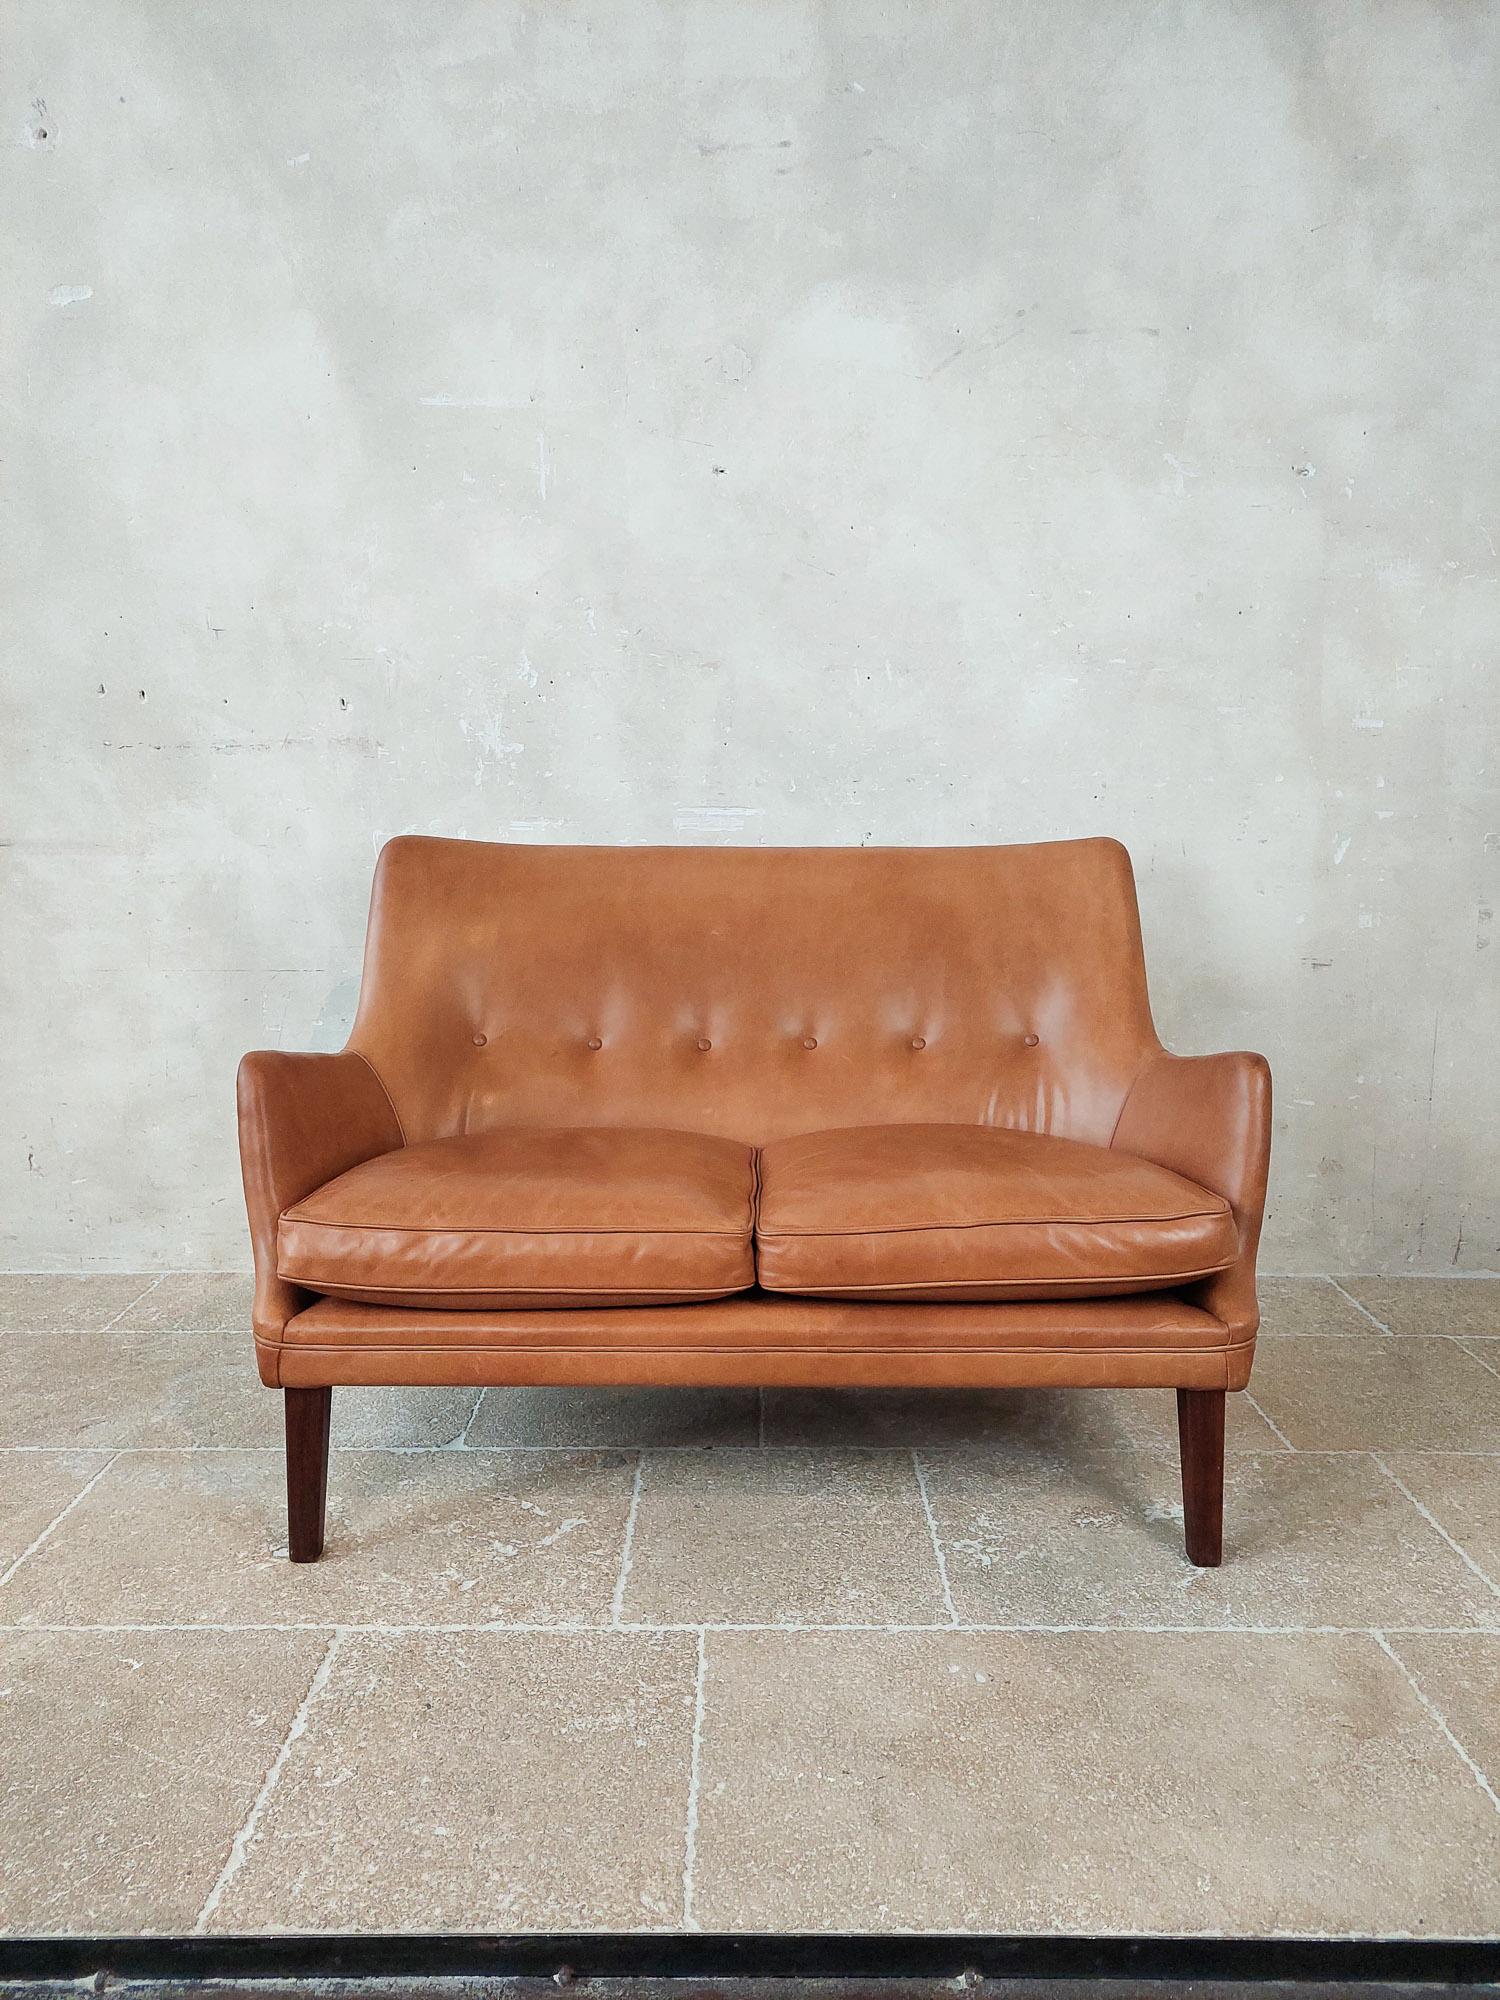 Scandinavian Modern Original Cognac Leather Two-Seater Sofa by Arne Vodder and Ivan Schlechter 1953